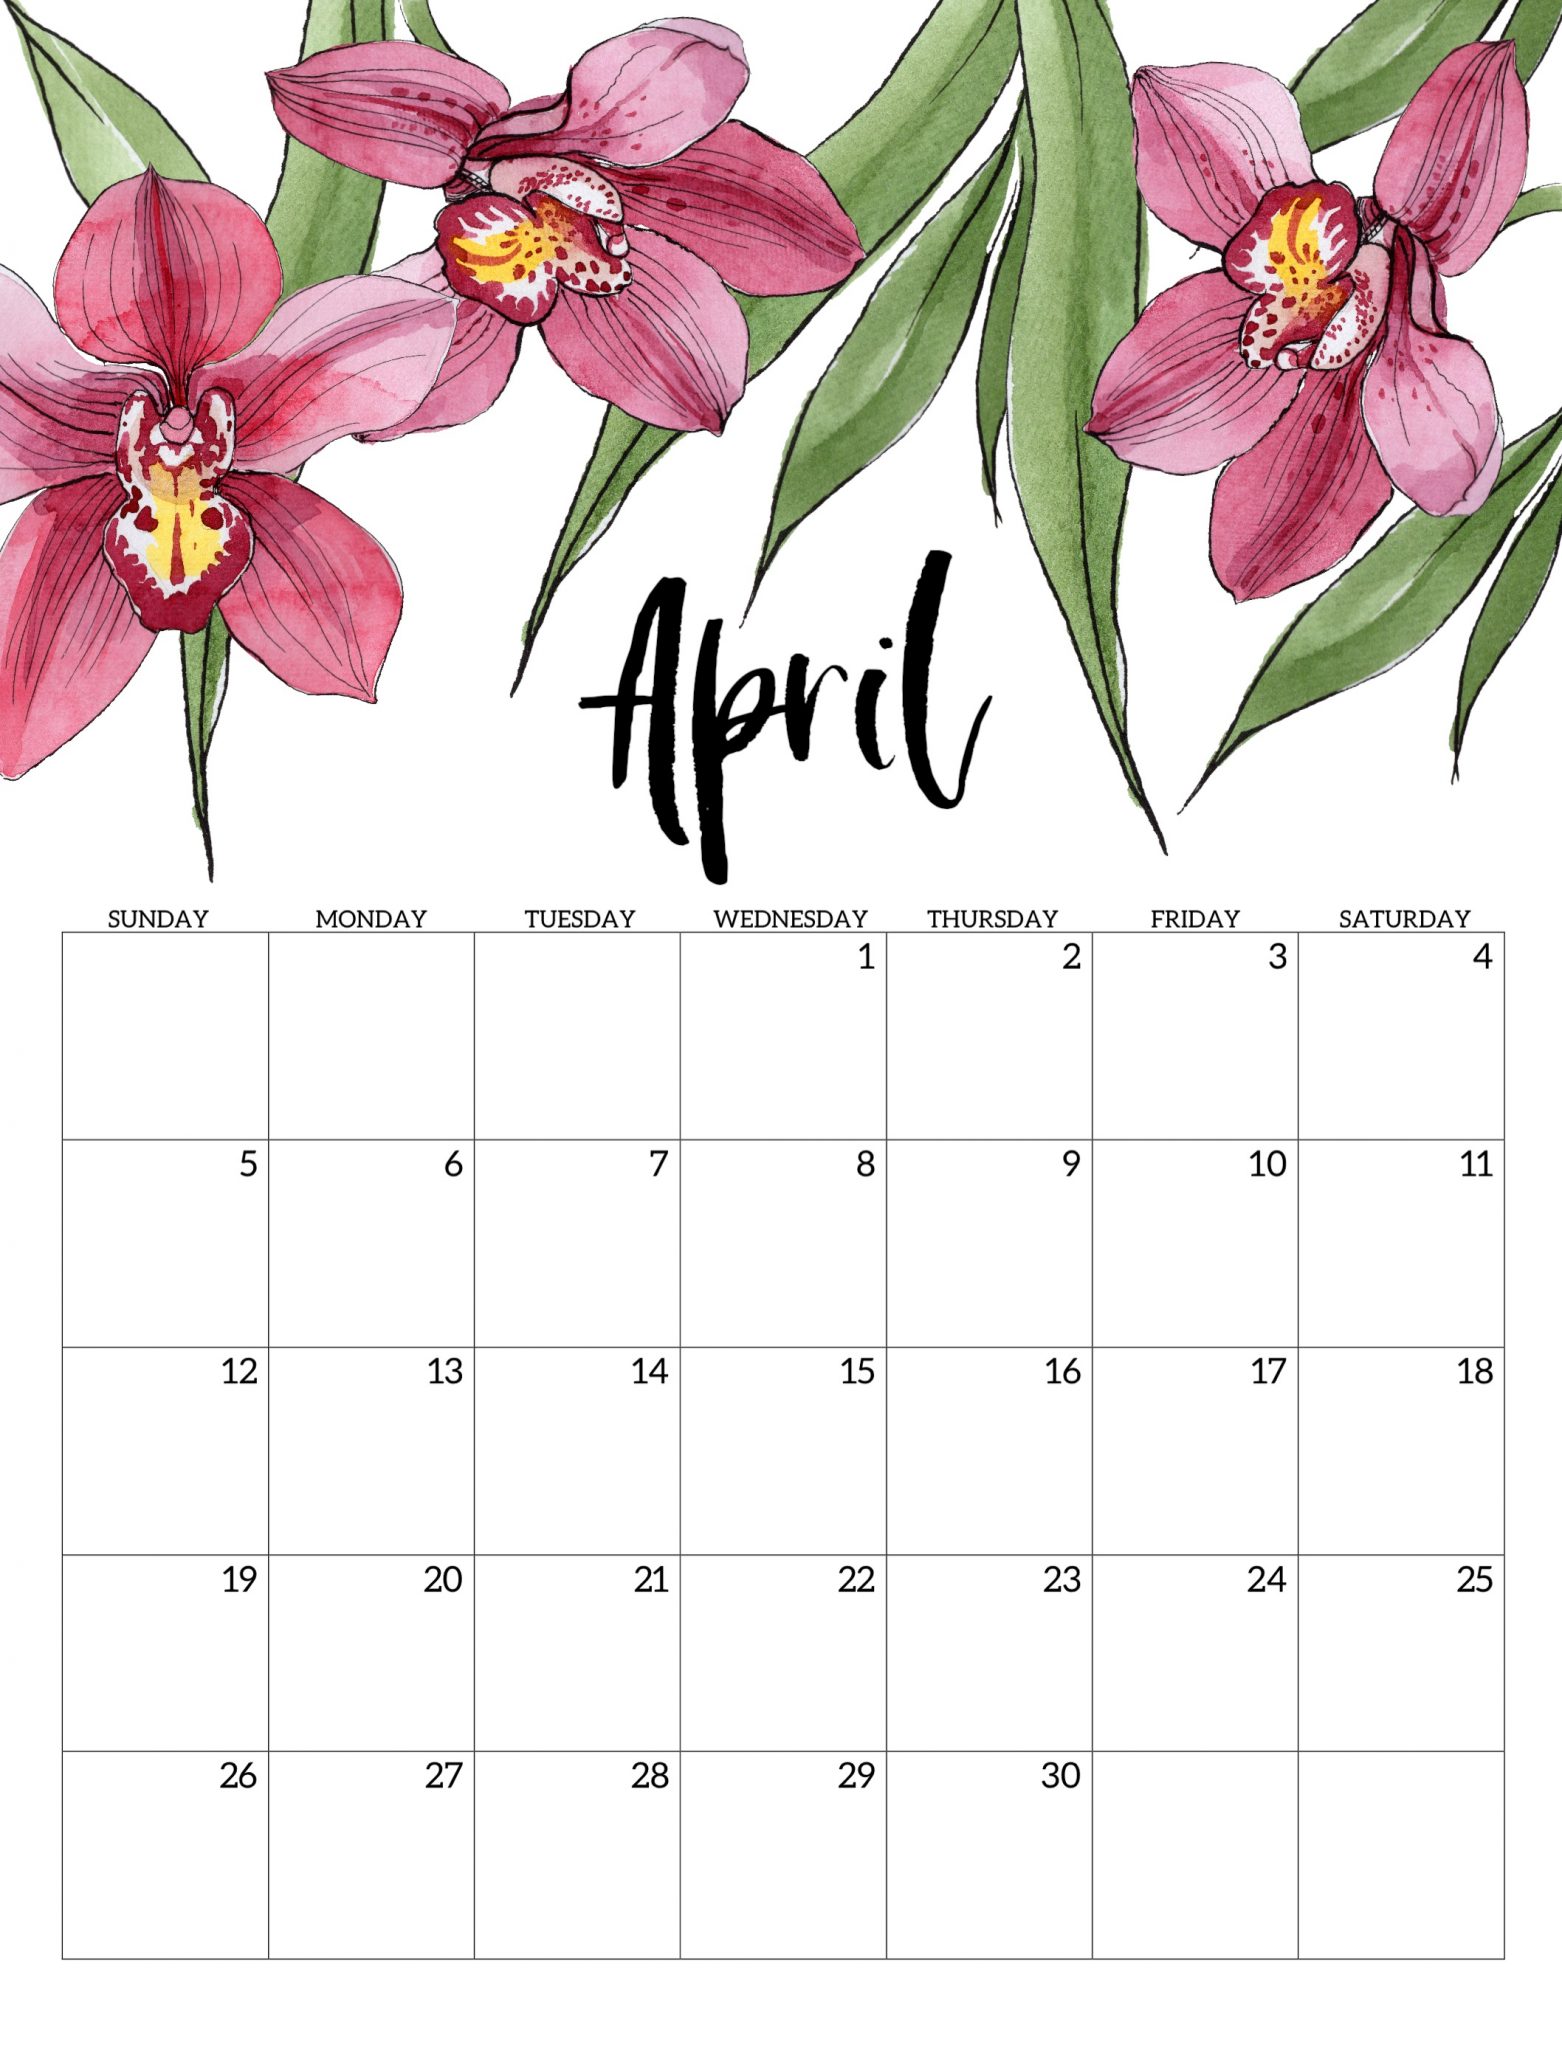 April 2020 Floral Calendar